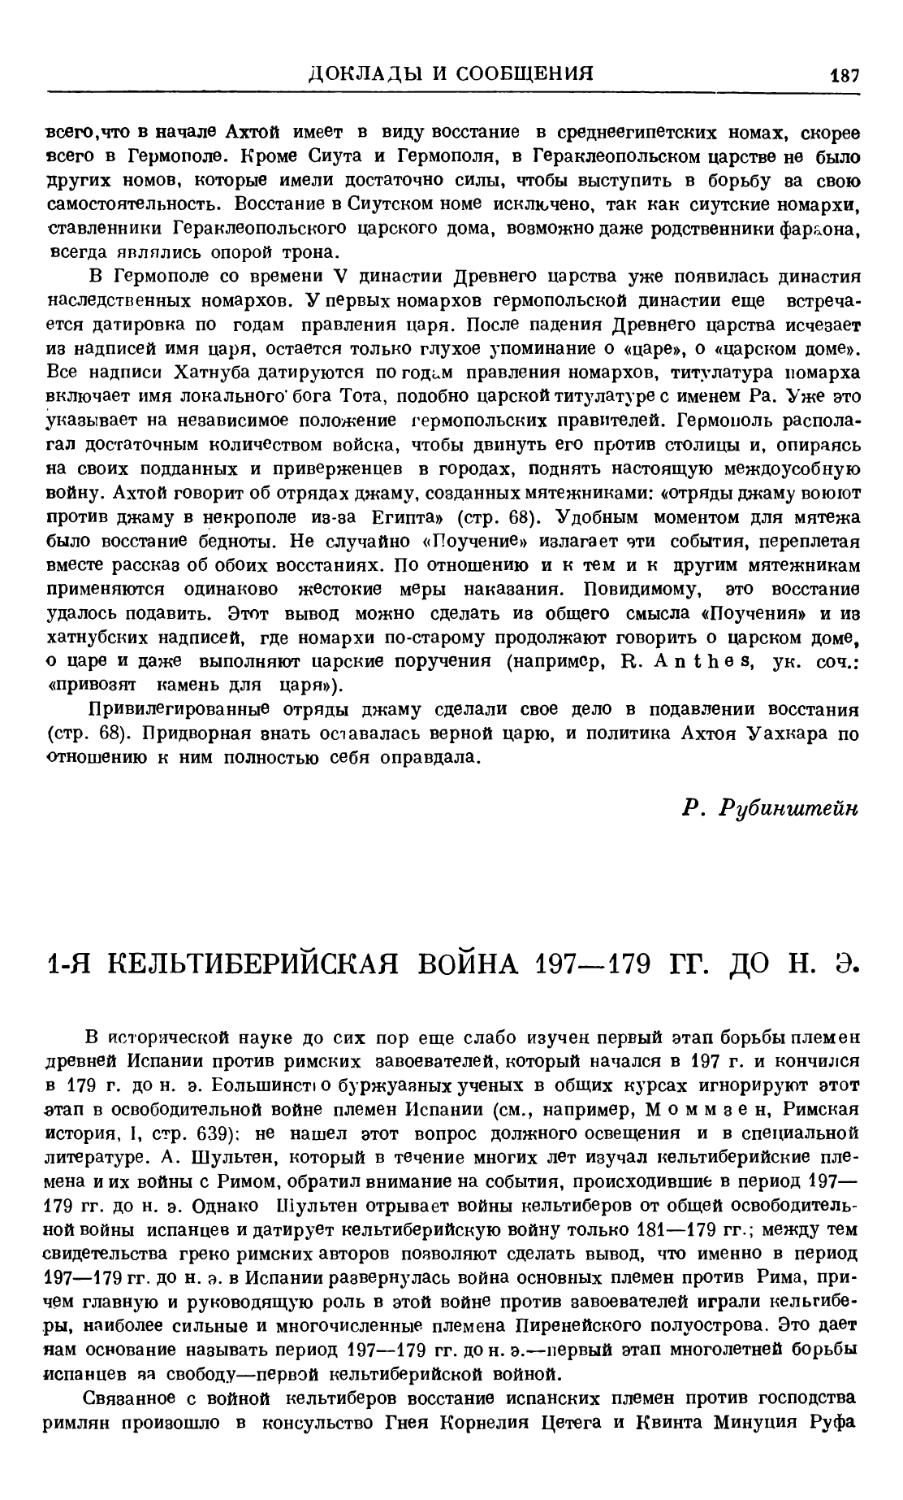 Л. М. Рогалин - 1-я Кельтиберийская война 197—179 гг. до н. э